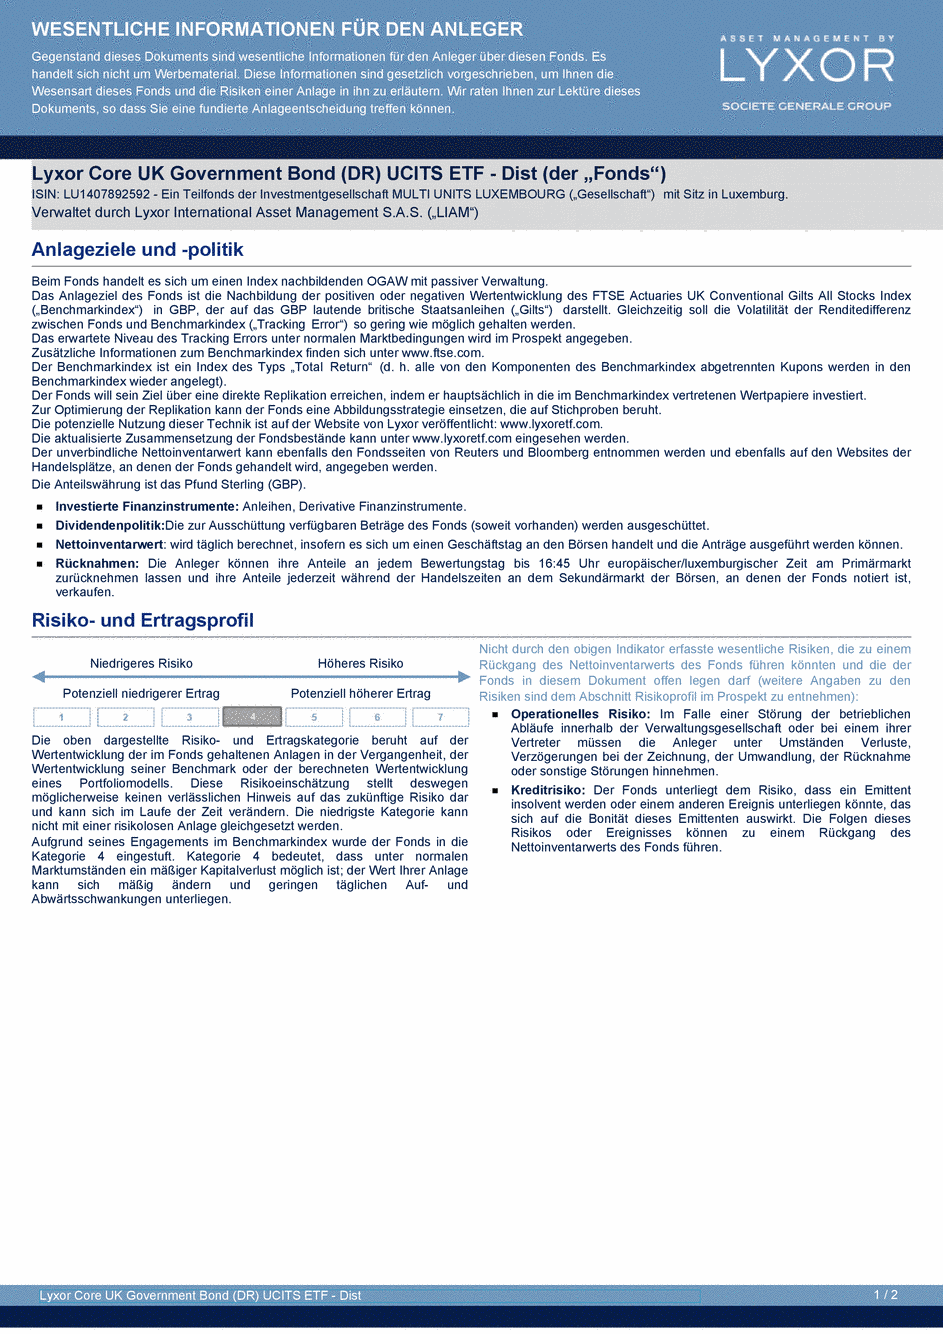 DICI Lyxor Core UK Government Bond (DR) UCITS ETF - Dist - 24/02/2021 - Allemand